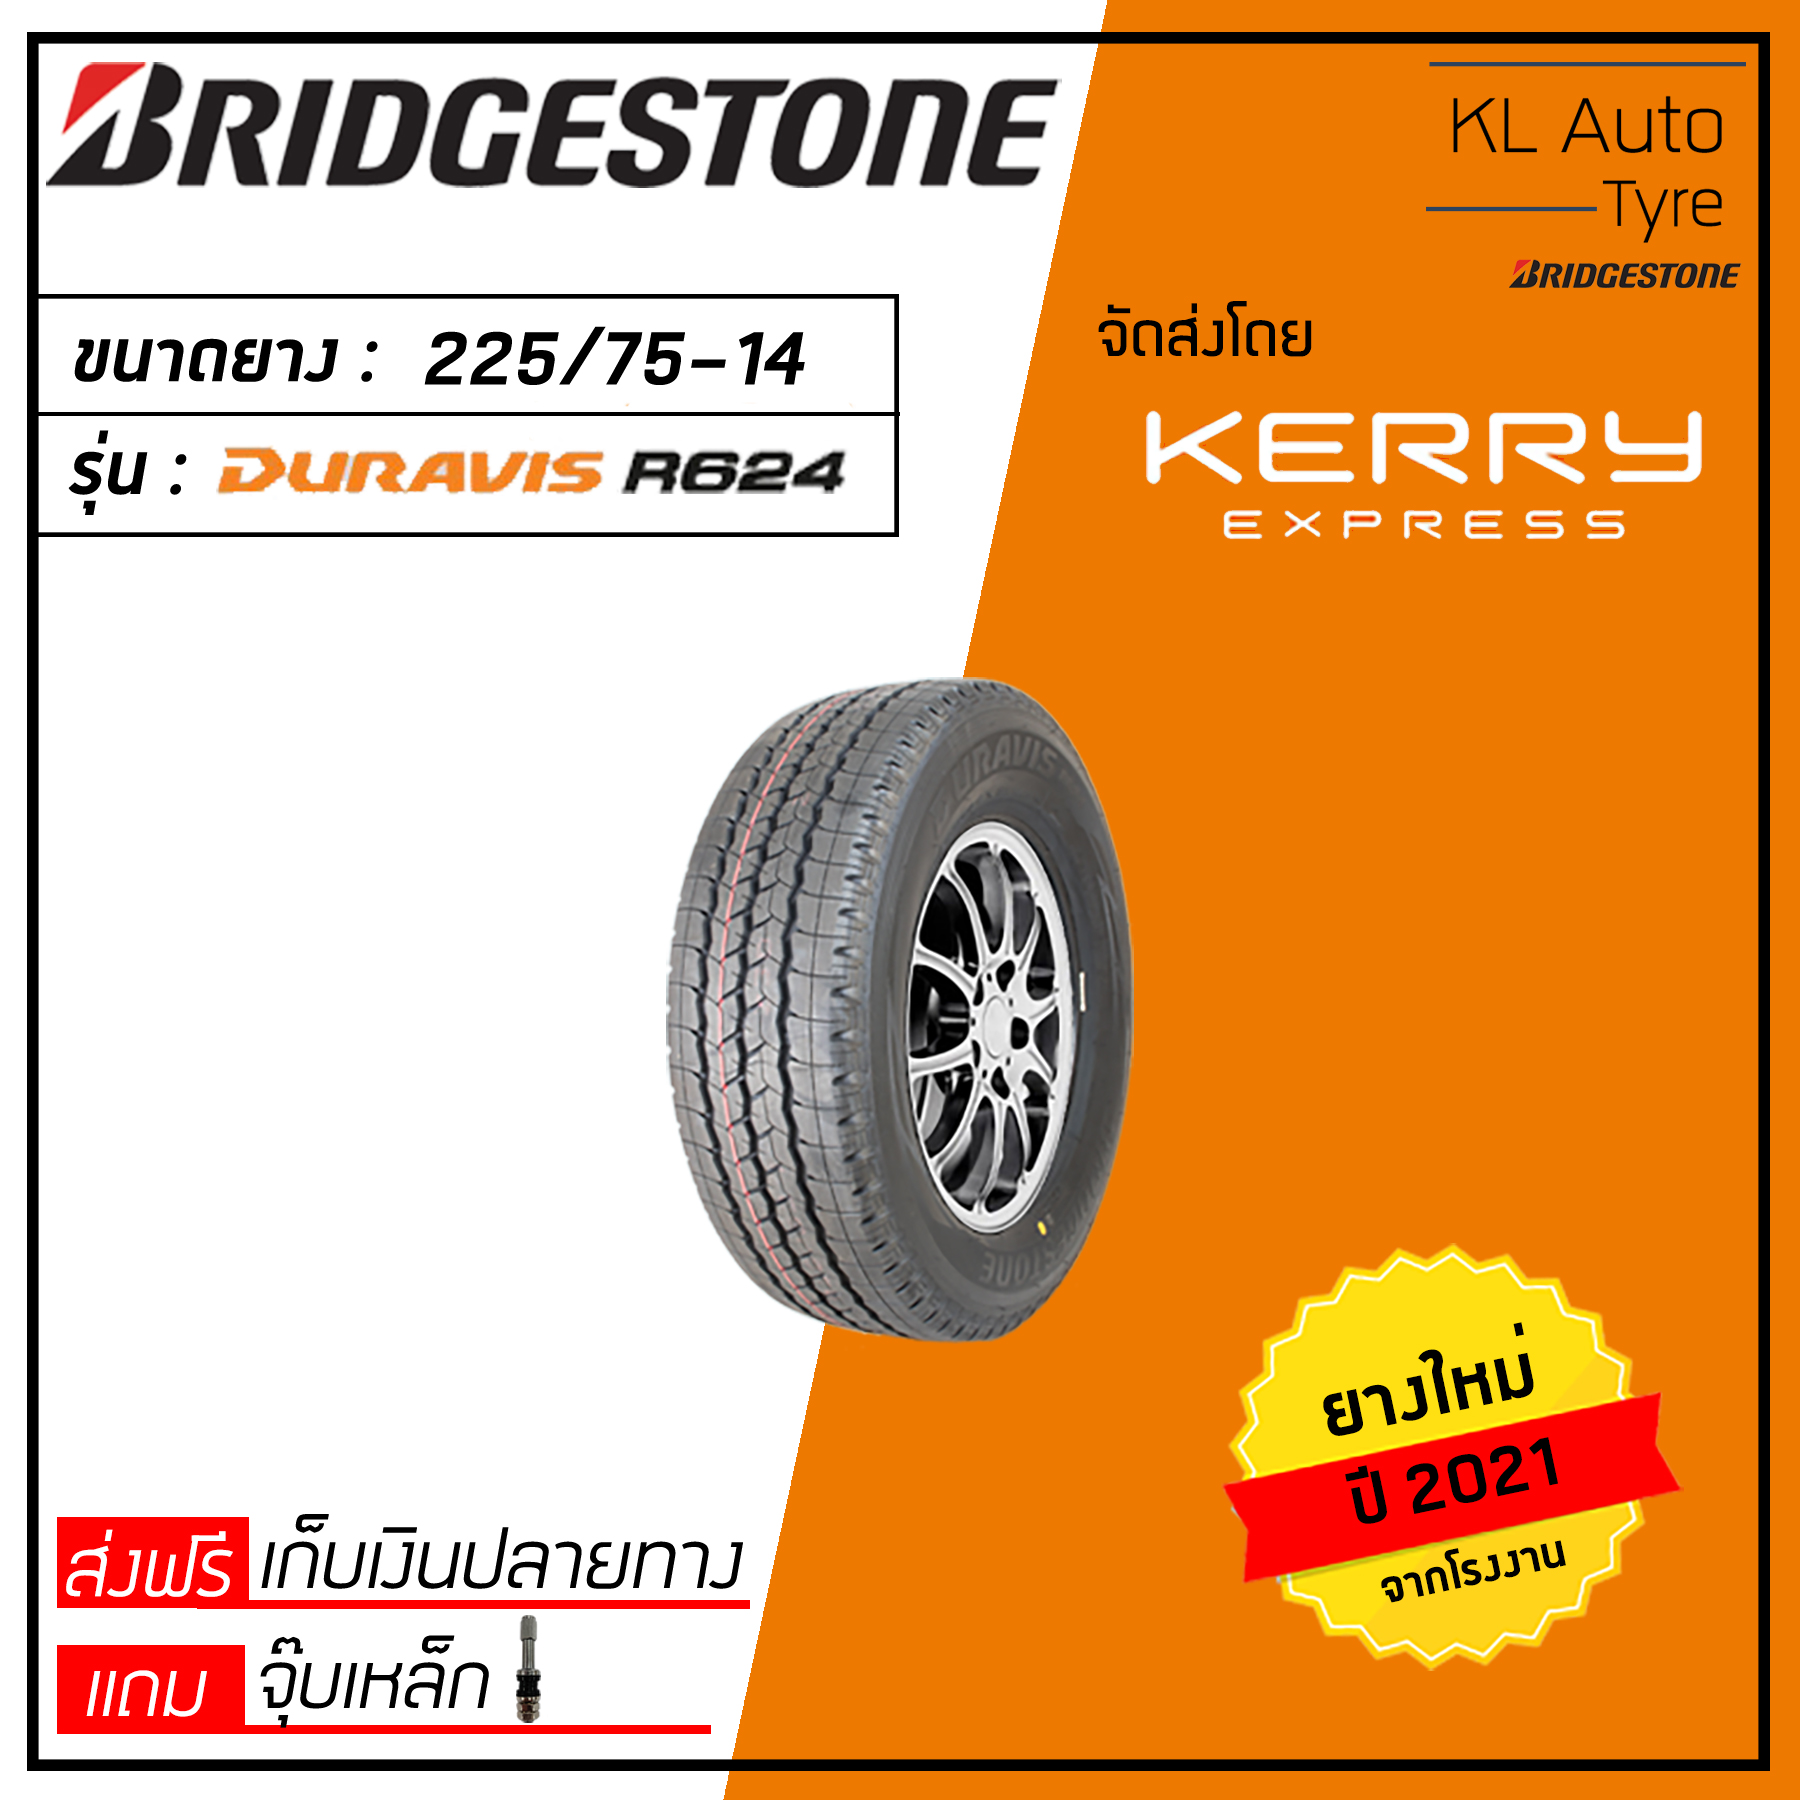 Bridgestone 225/75-14 R624 1 เส้น ปี 21 (ฟรี จุ๊บเหล็ก 1 ตัว มูลค่า 100 บาท)